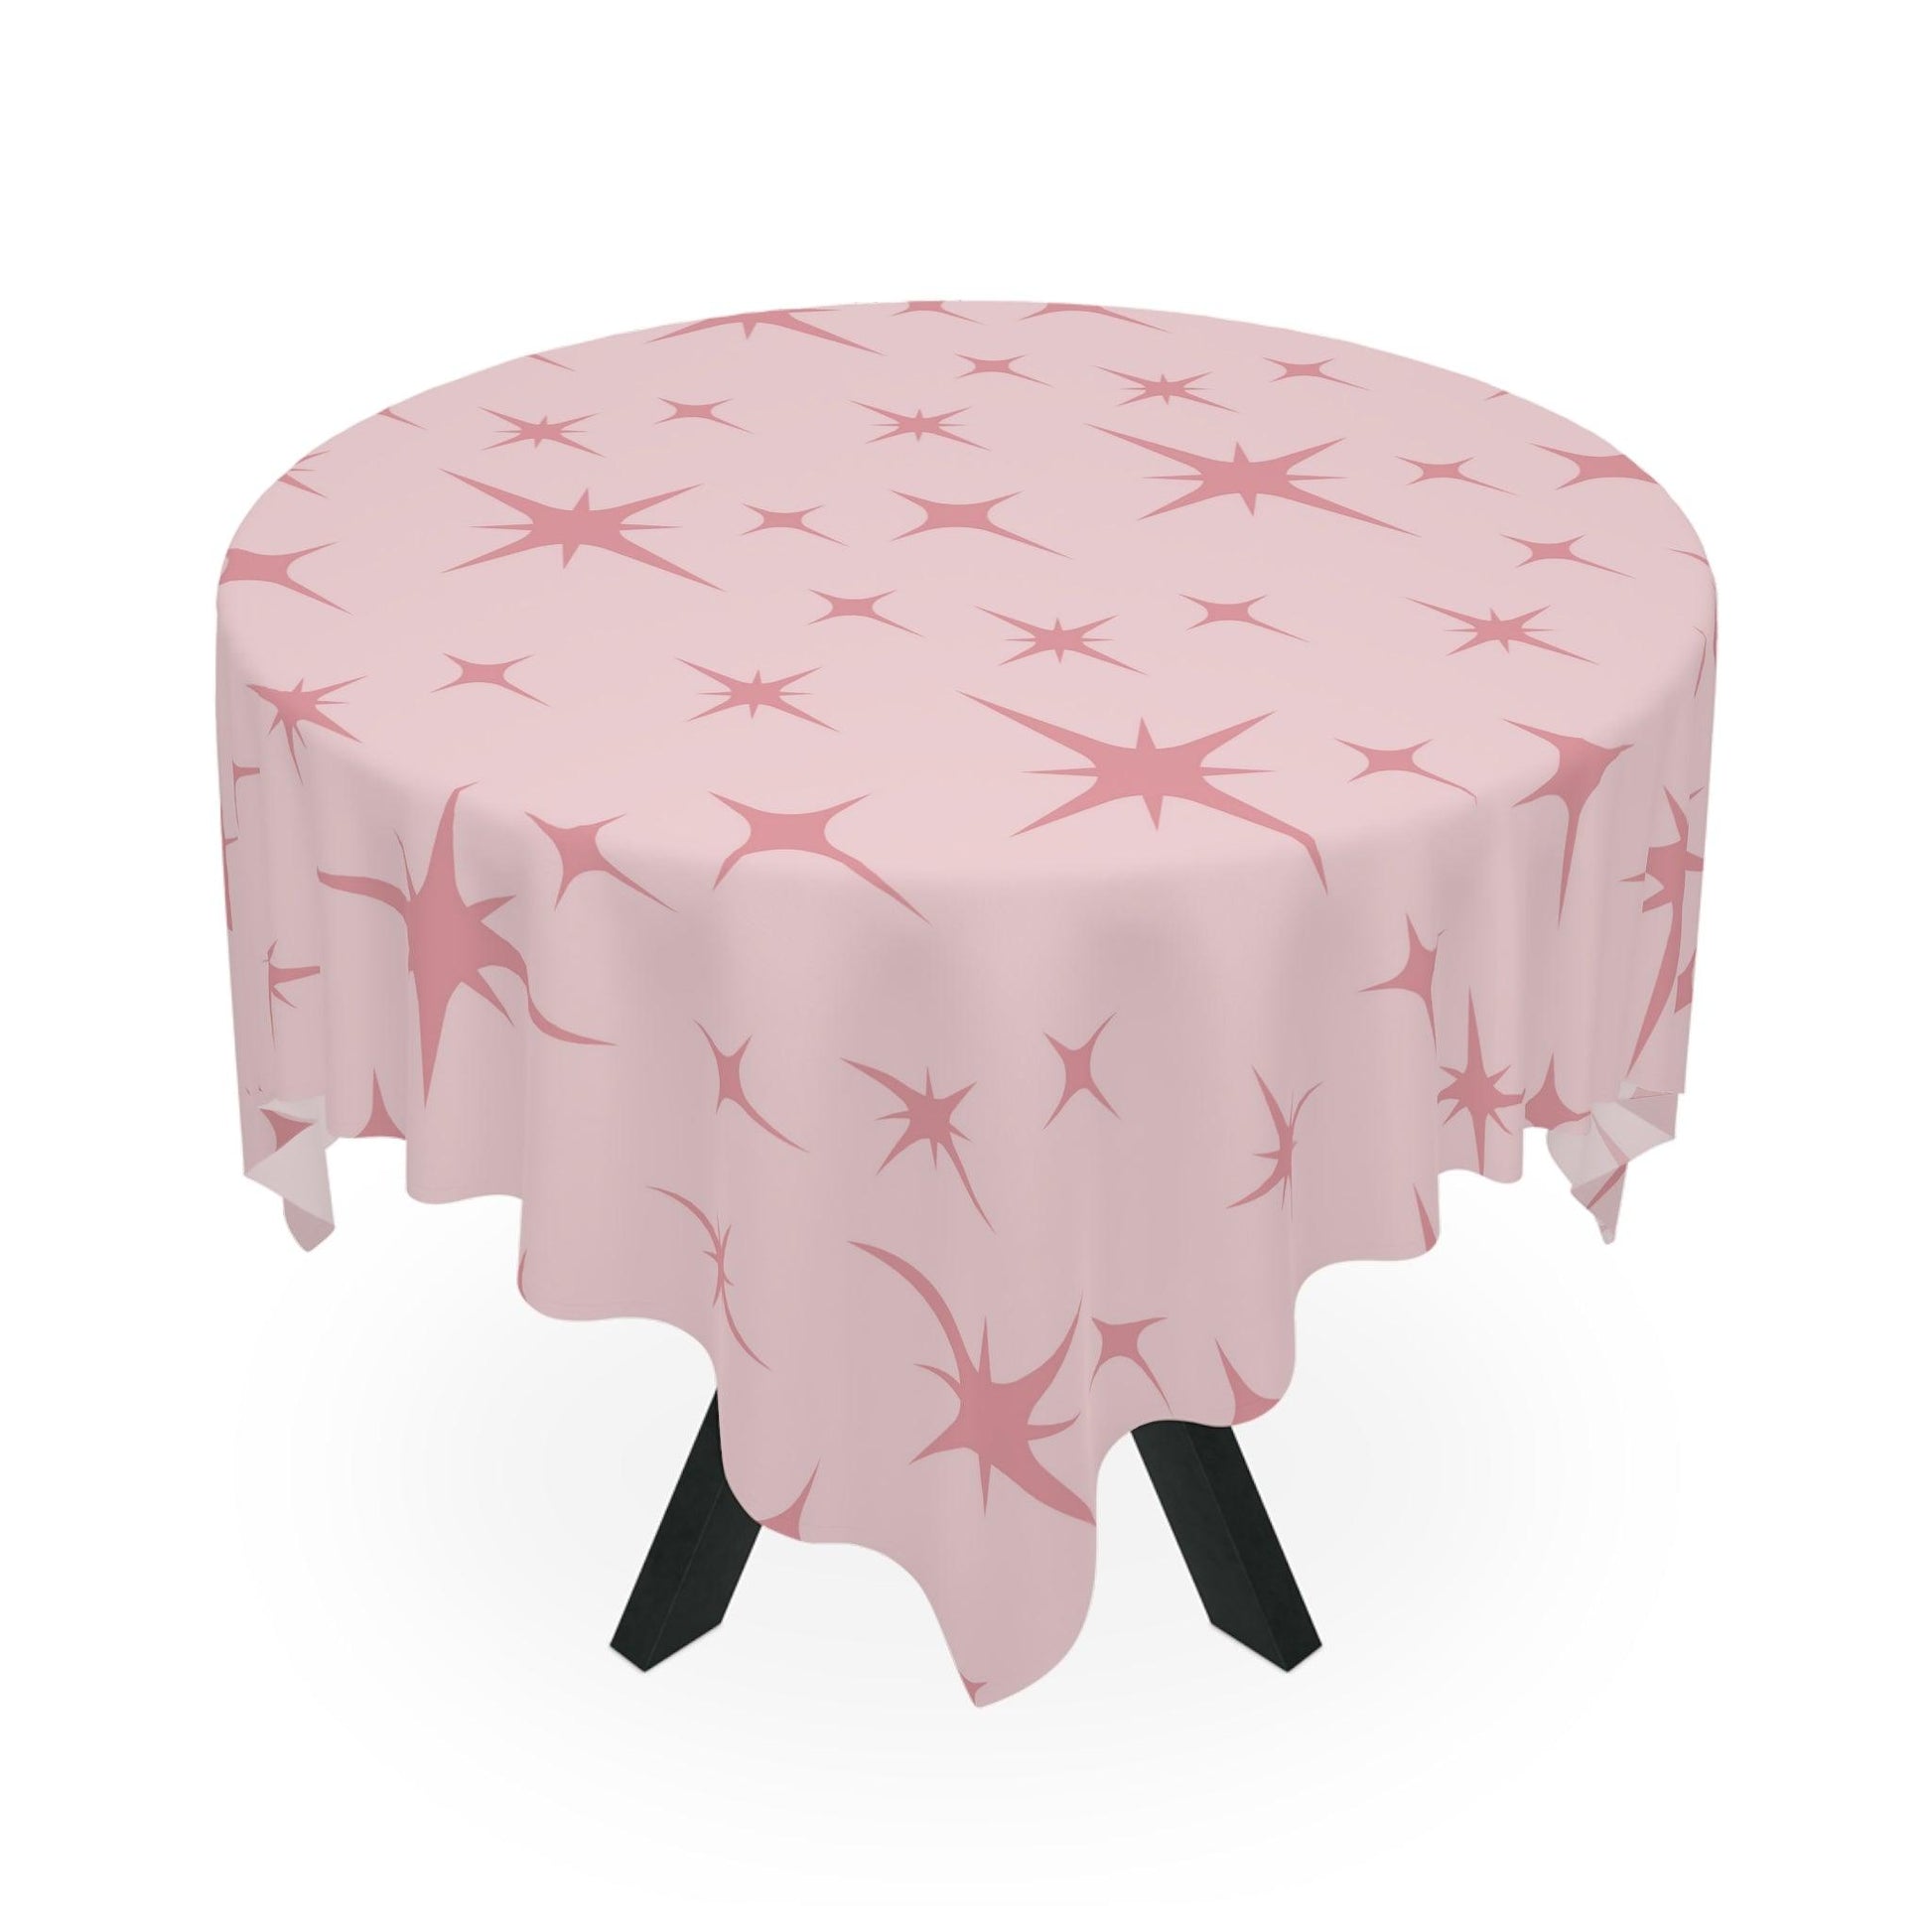 Retro 50s Pink Atomic Starbursts Mid Century Modern Tablecloth | lovevisionkarma.com